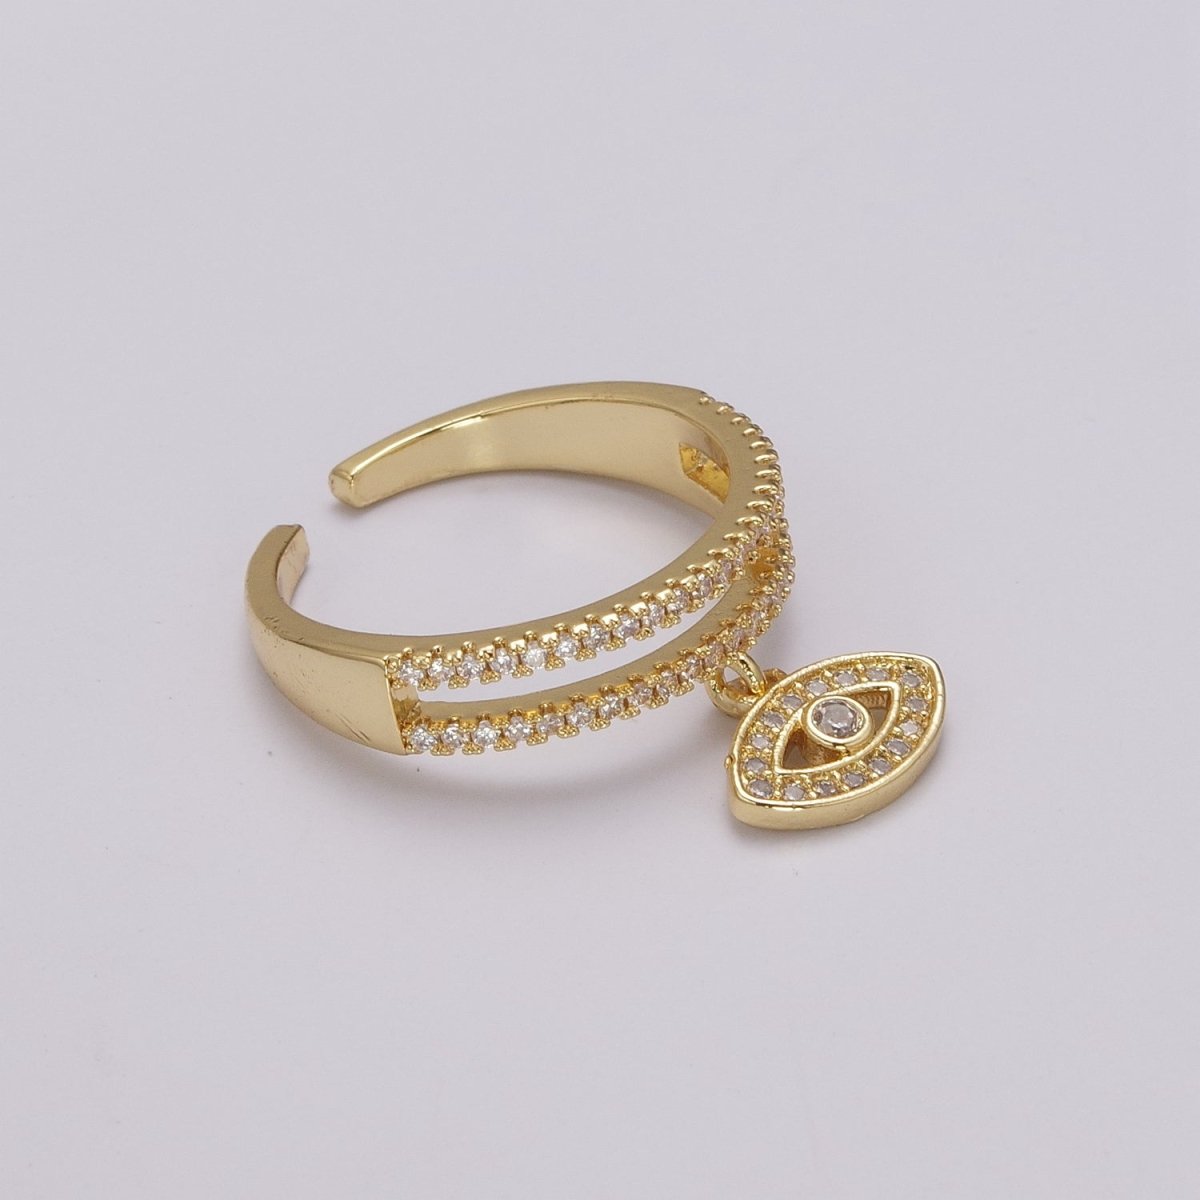 Cute Cz Gold Evil eye ring - Stackable Eye Ring - CZ Rings - Dangle Eye Ring - Dainty Stackable Rings - Adjustable Open Ring U-120 - DLUXCA